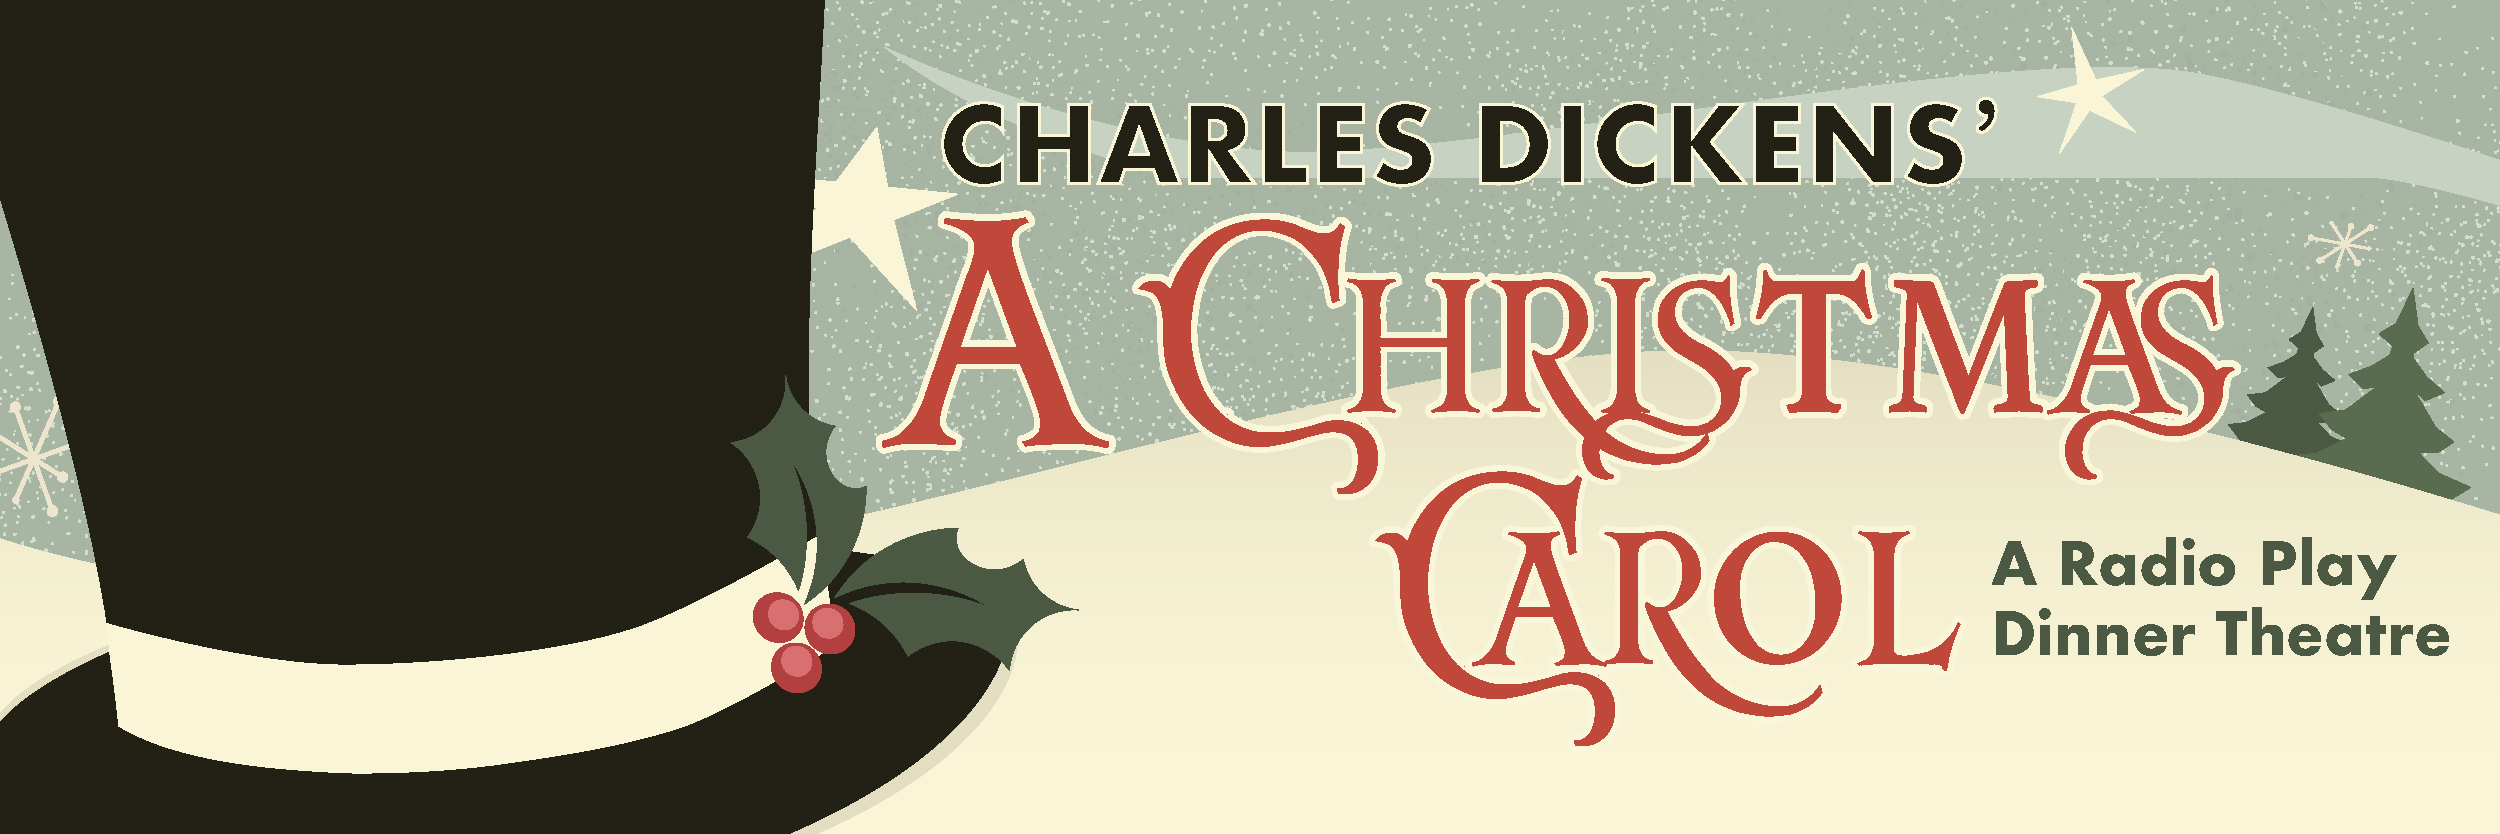 Charles Dickens' A Christmas Carol. A Radio Play Dinner Theatre